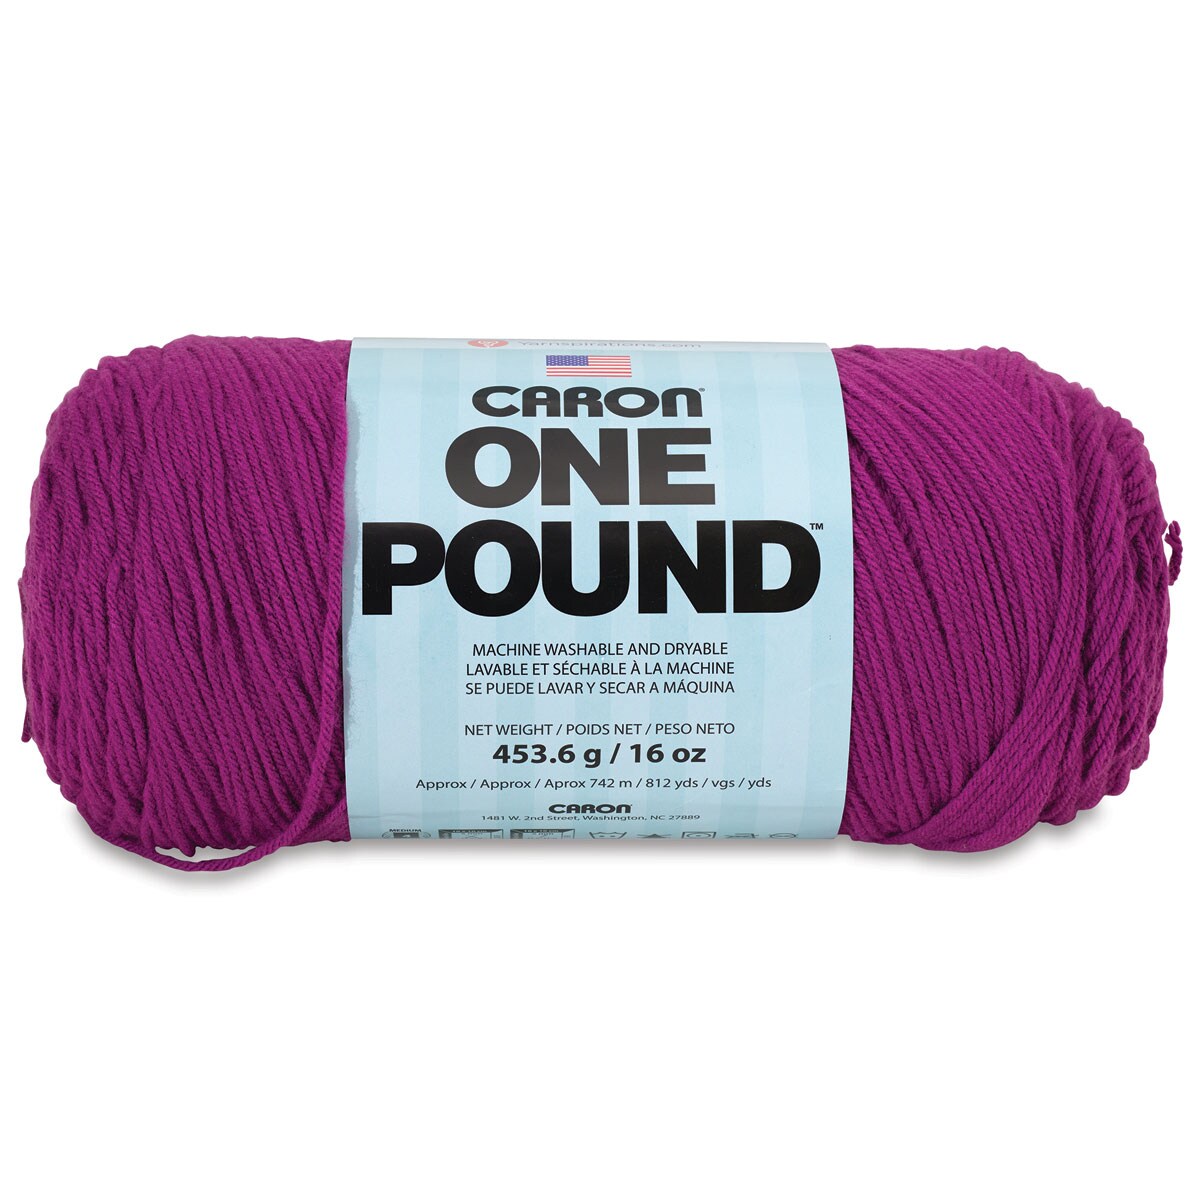 Caron One Pound Acrylic Yarn - 1 lb, 4-Ply, Soft Pink